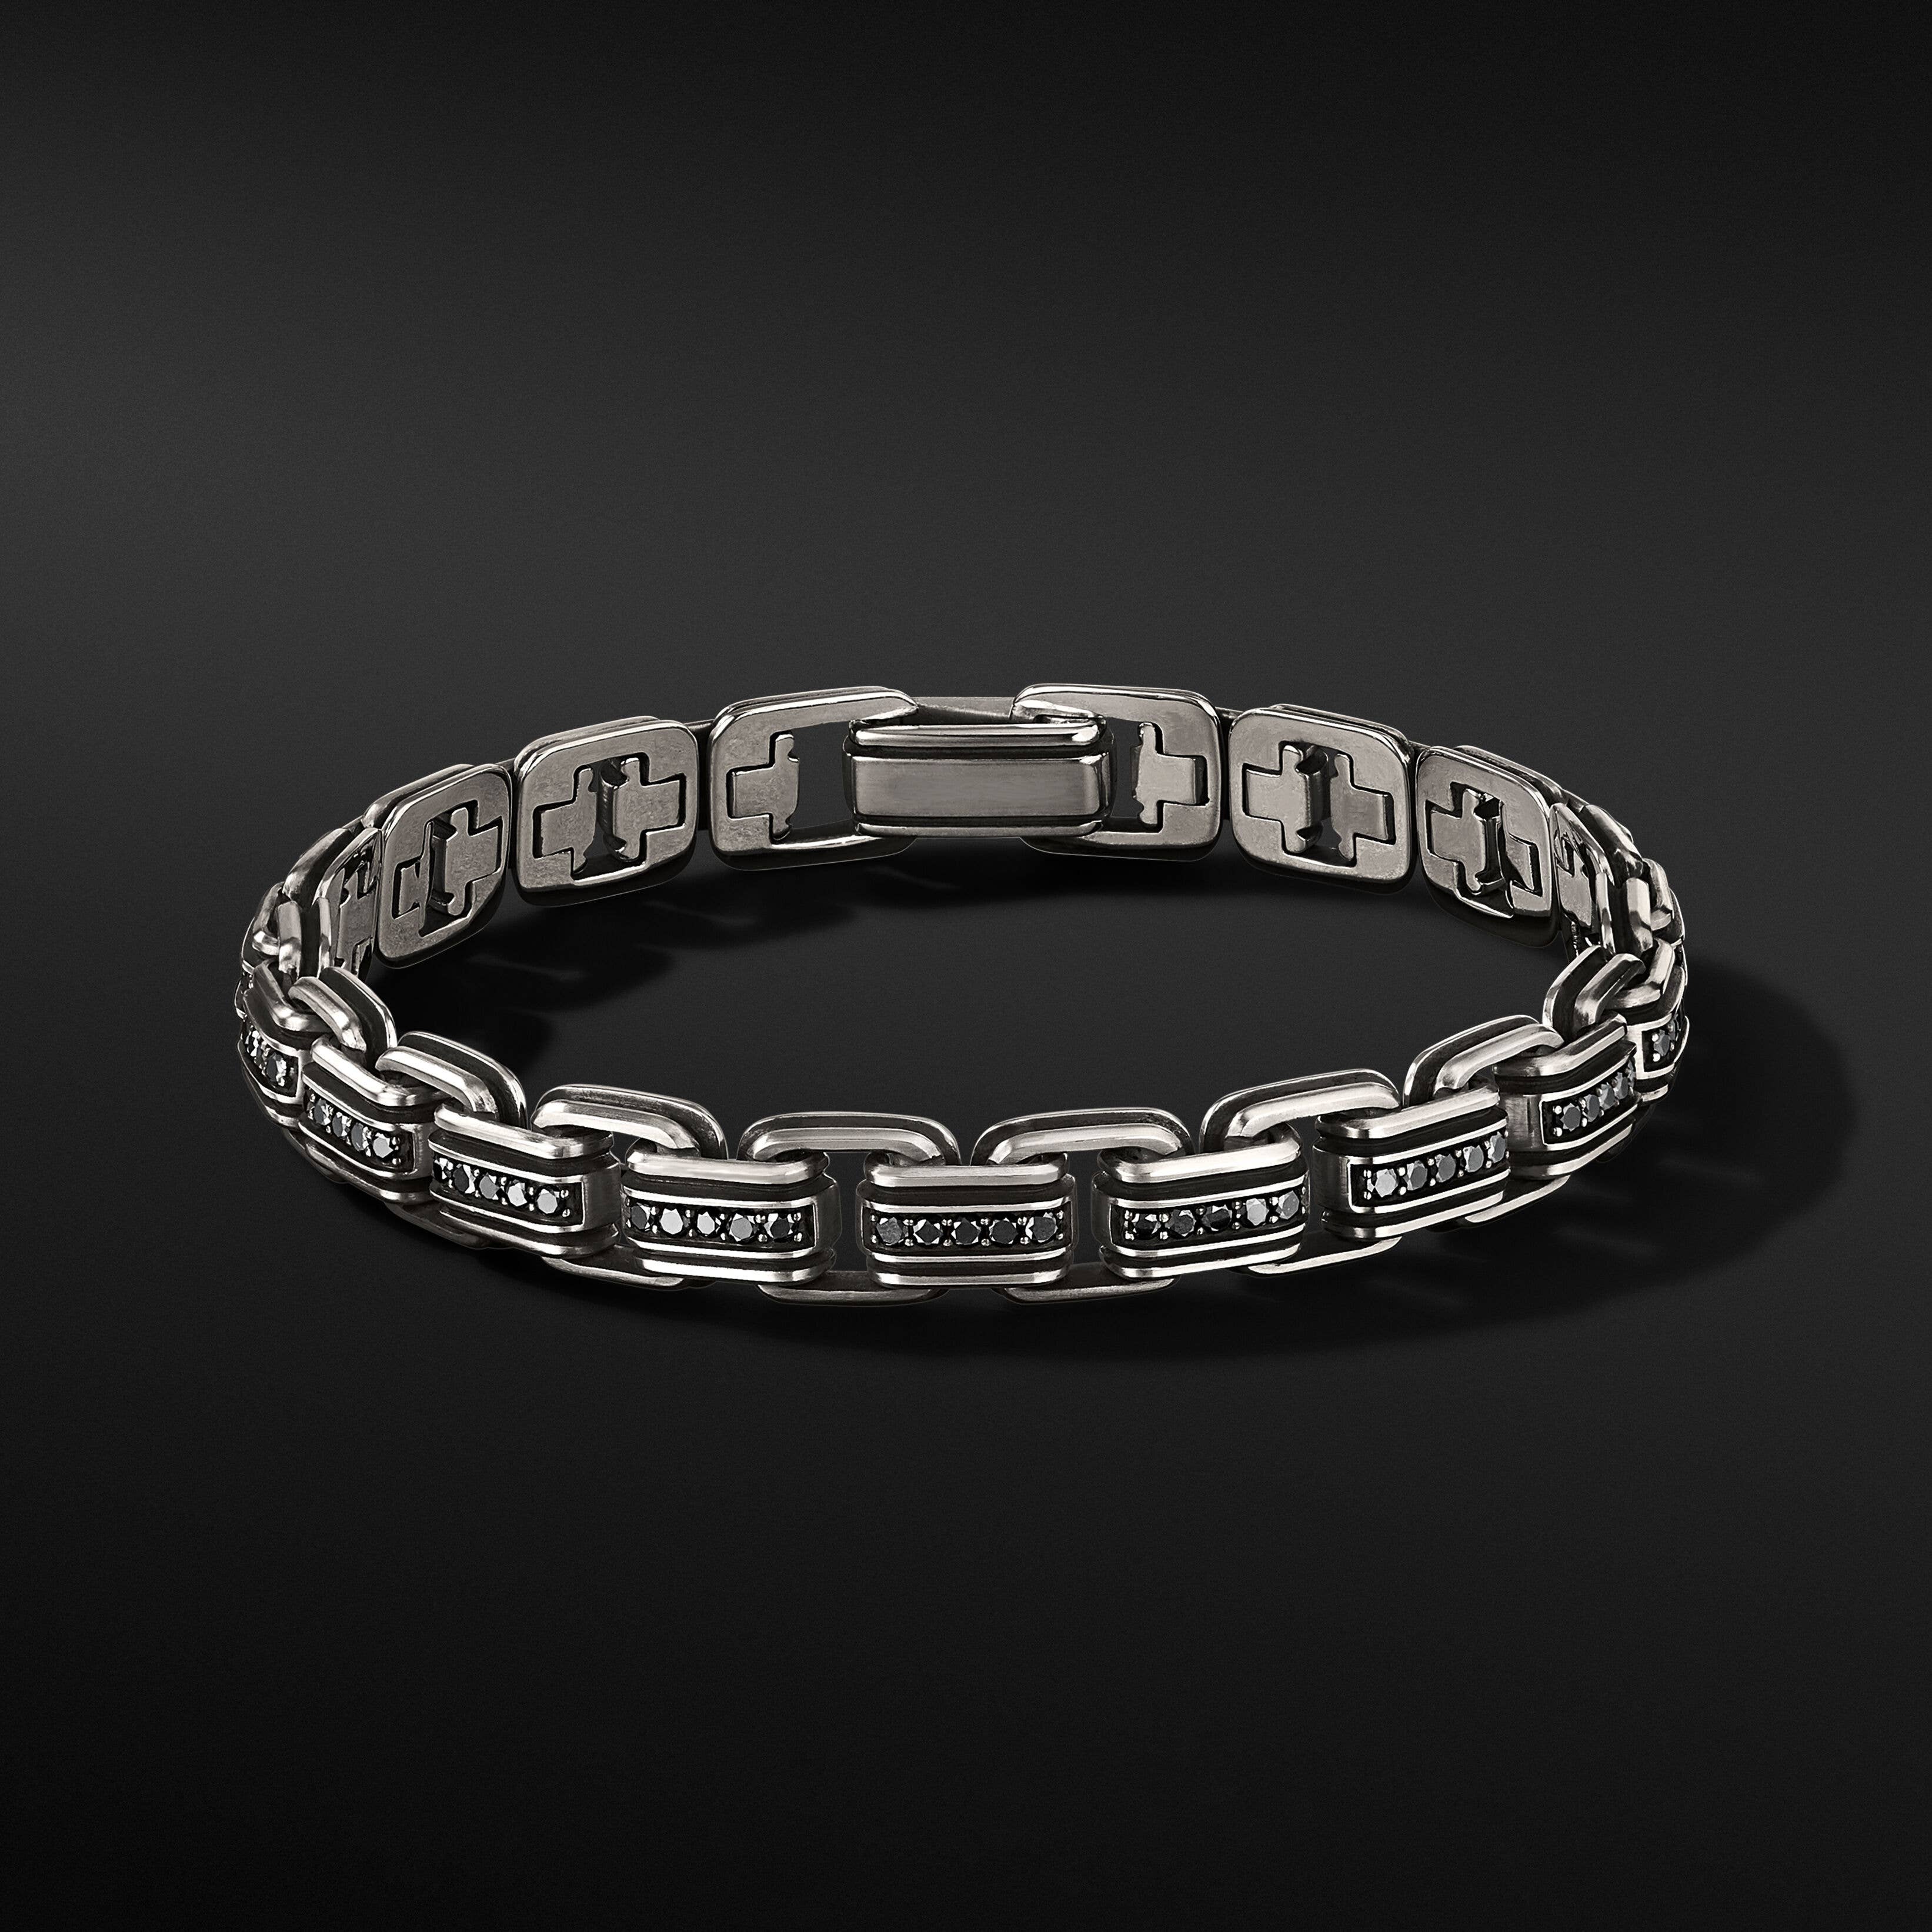 Deco Chain Link Bracelet in Sterling Silver with Pavé Black Diamonds